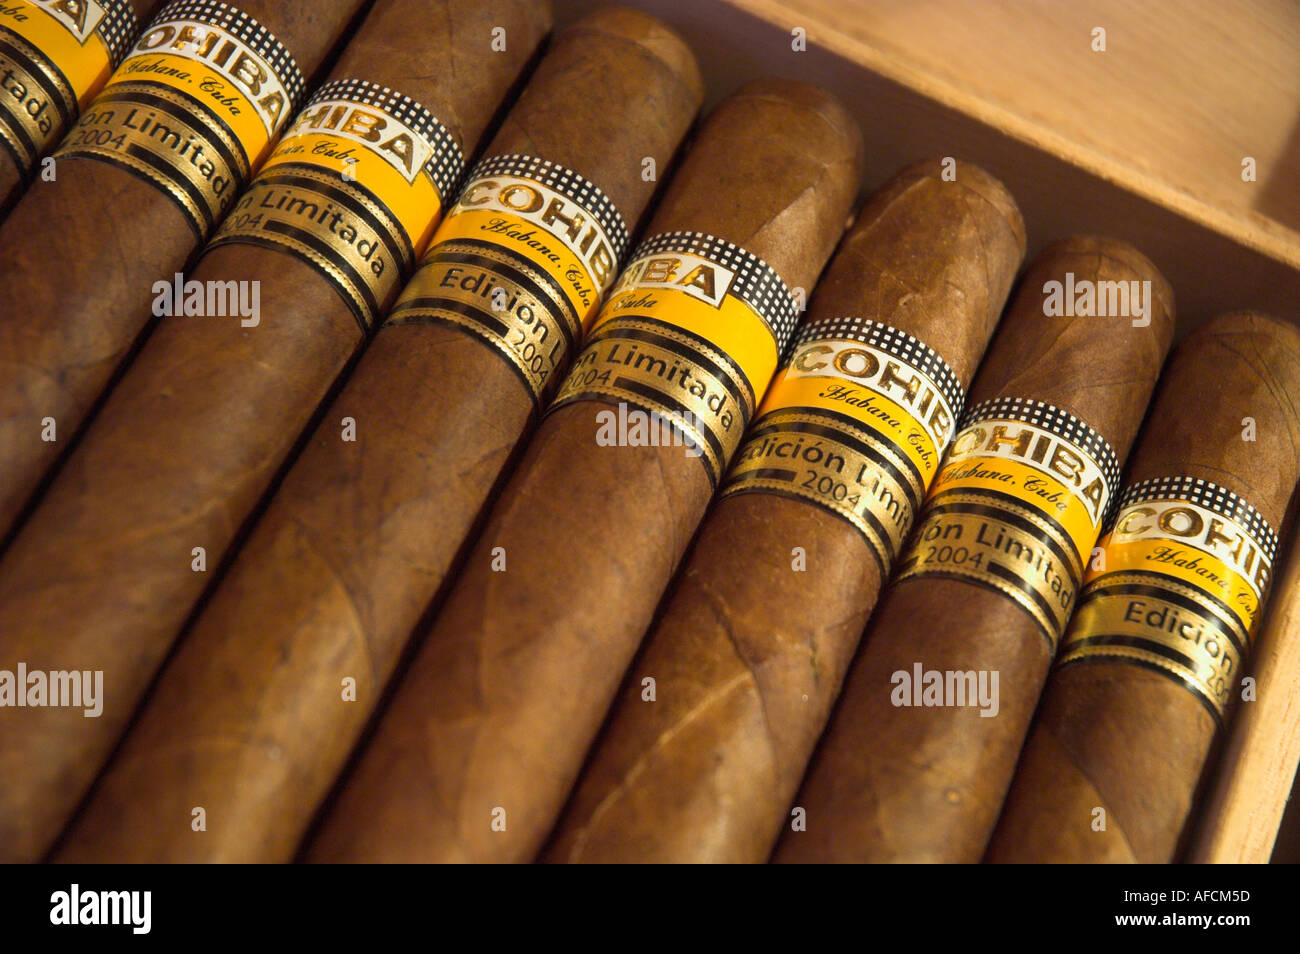 Kuba-Havanna-Zigarren Cohiba limitiert Box hautnah Stockfotografie - Alamy